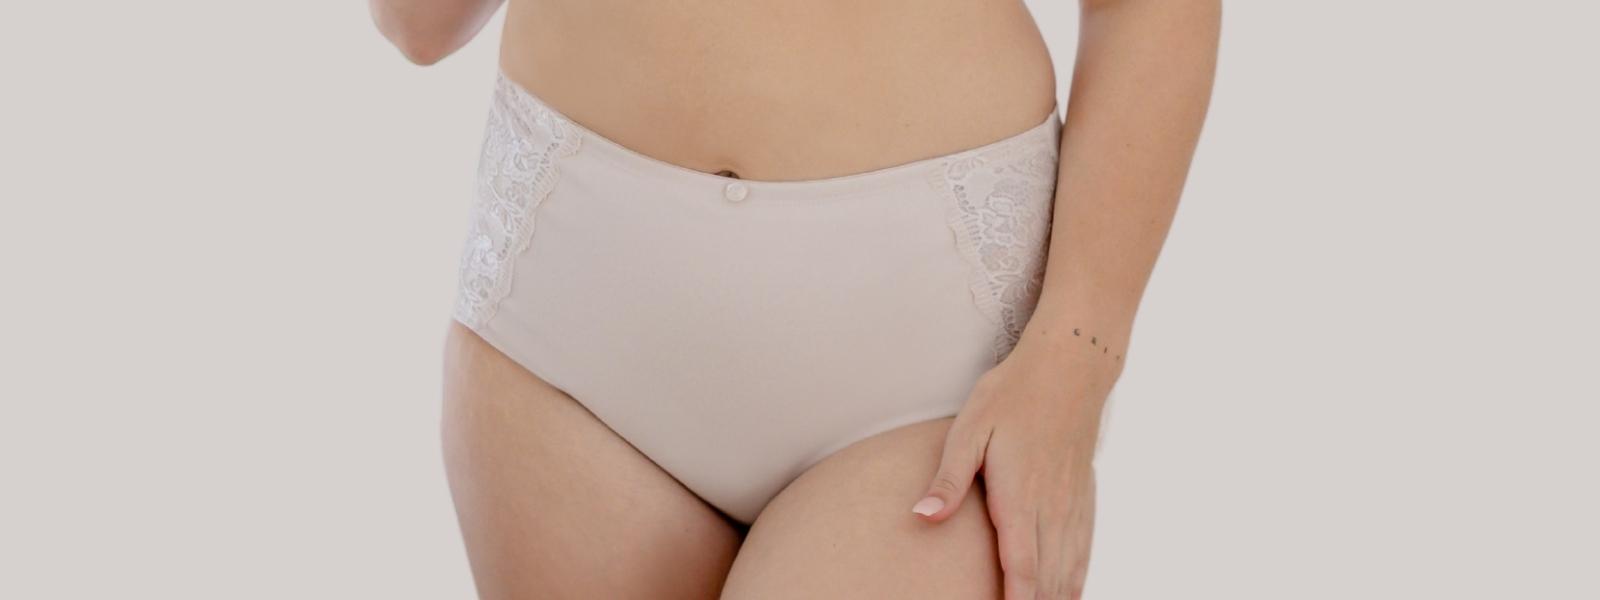 Lace shaping underwear | Bella Bodies Australia